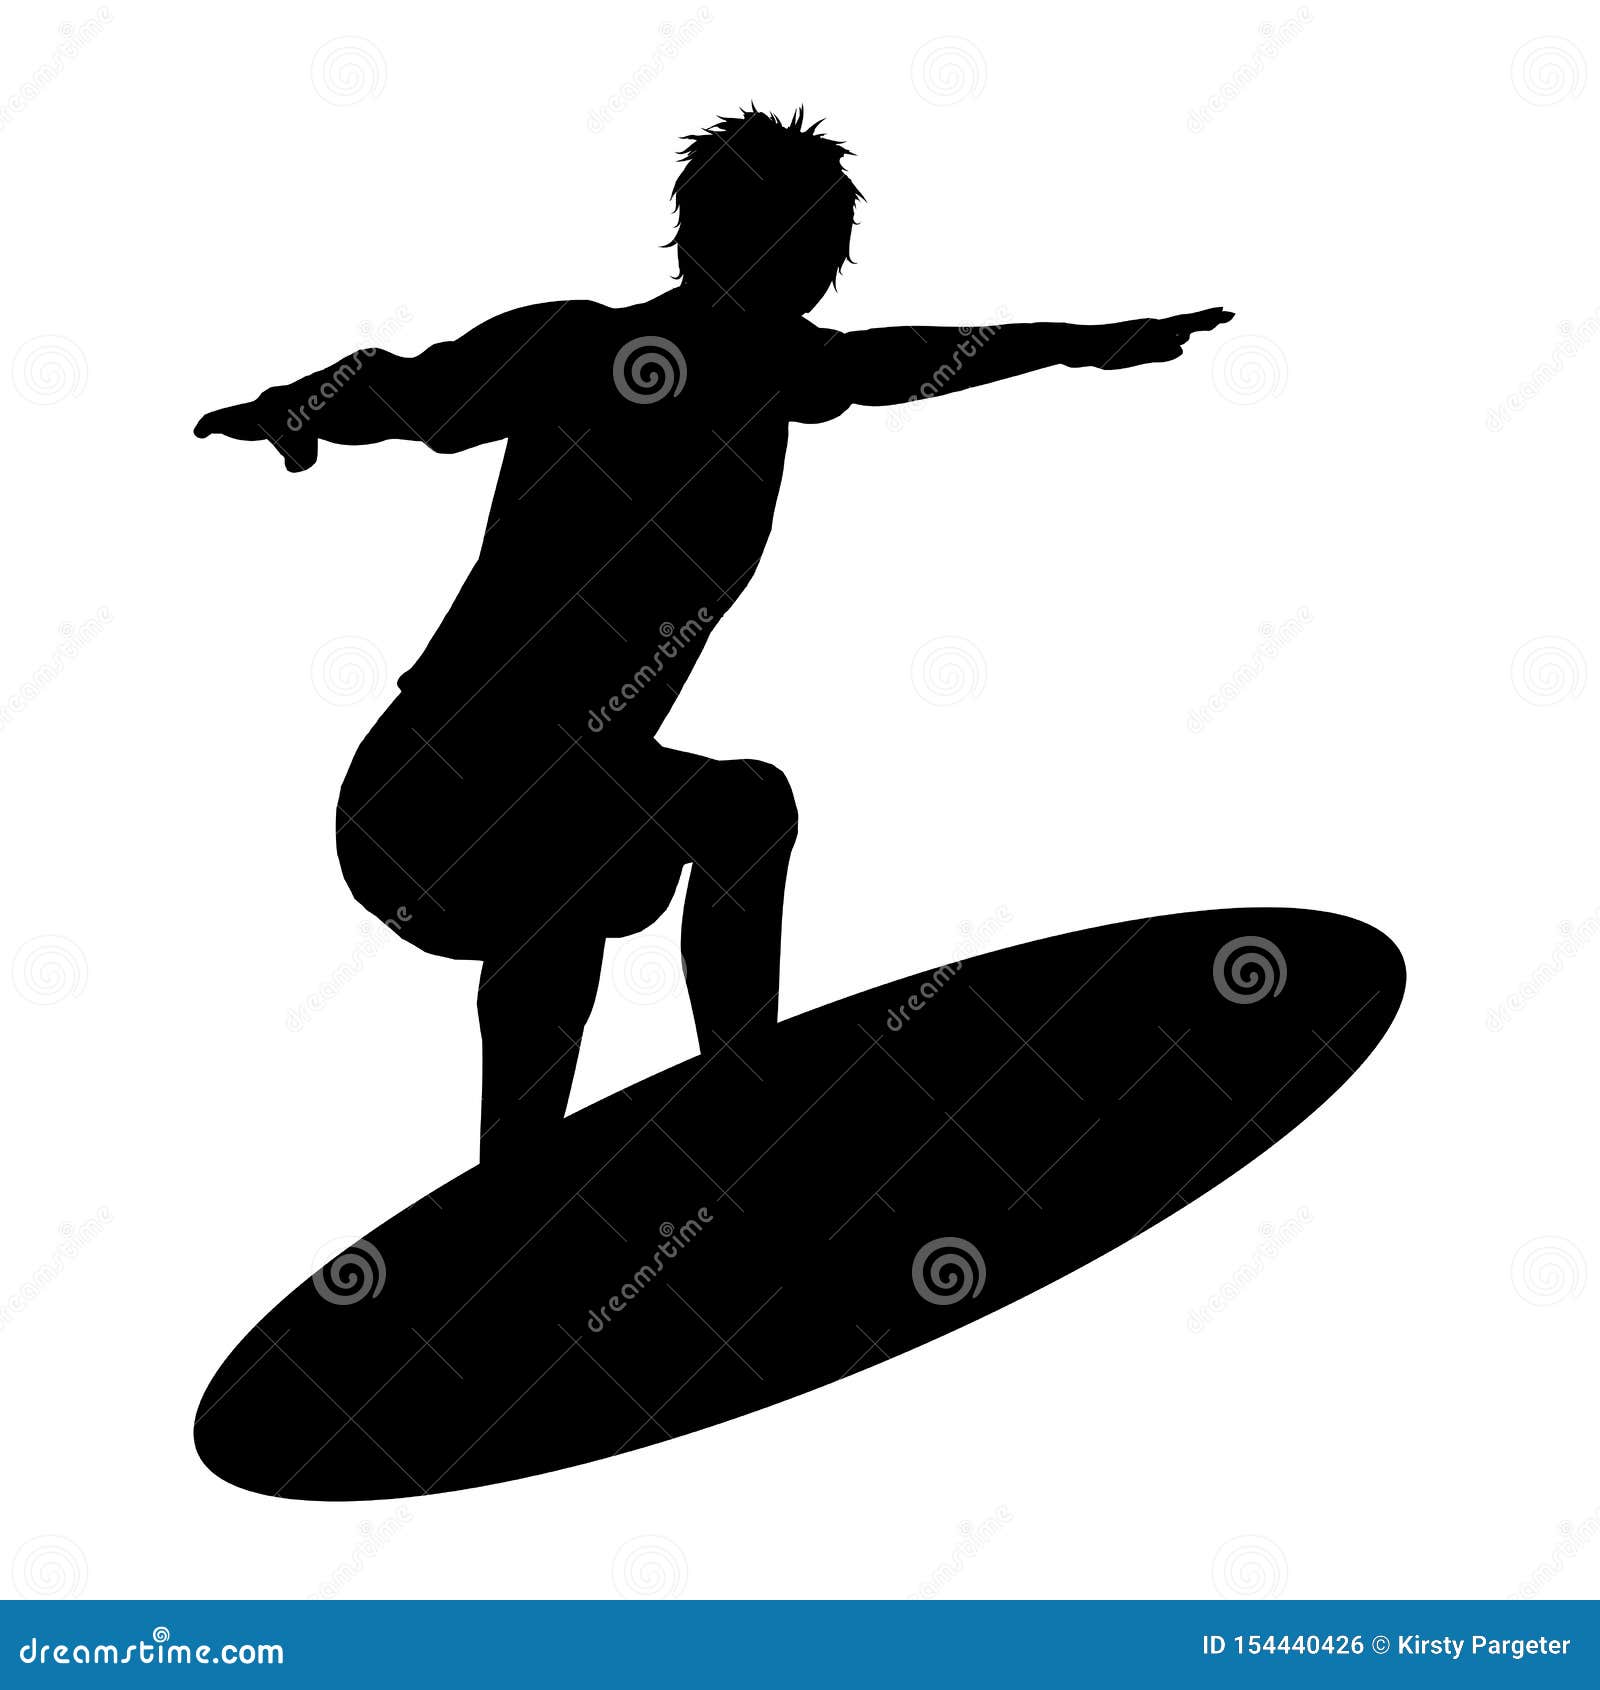 Surfer silhouette stock illustration. Illustration of summer - 154440426